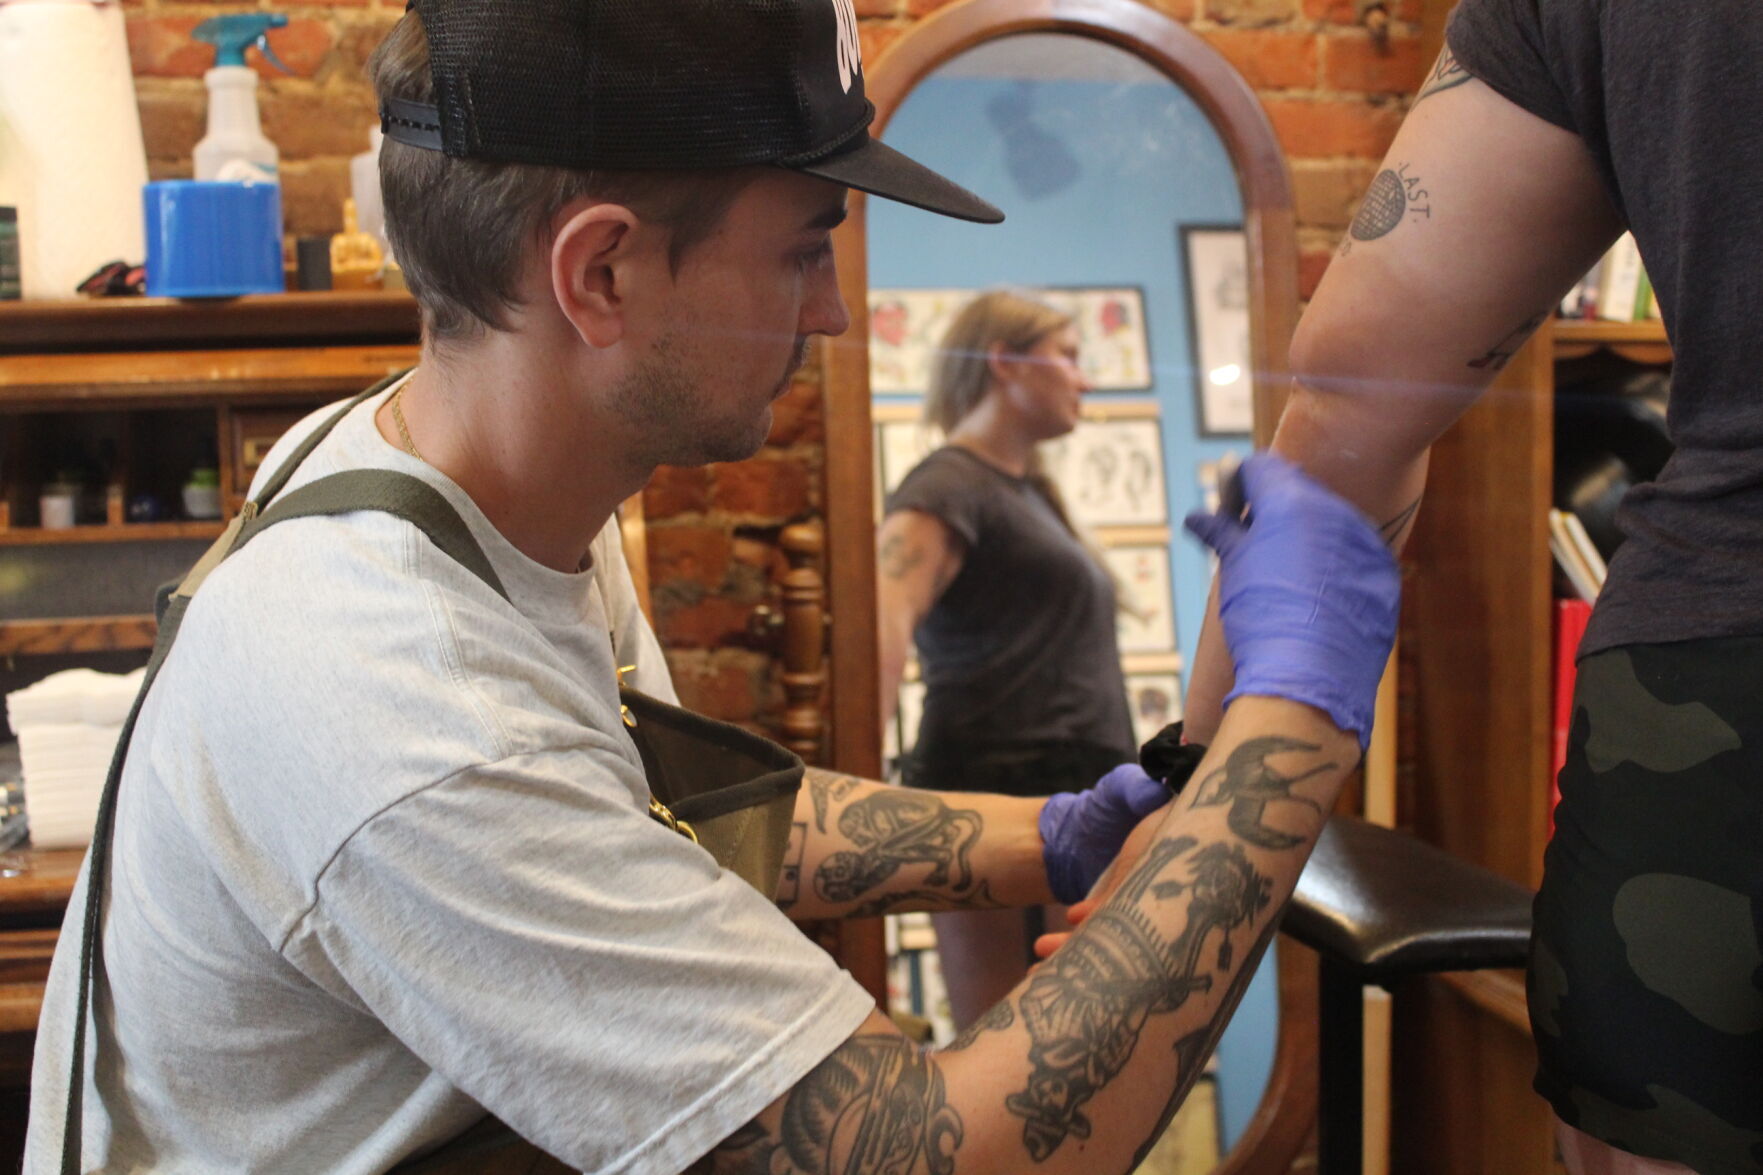 Tattoo On Arm Granit Xhaka Arsenal Editorial Stock Photo - Stock Image |  Shutterstock Editorial